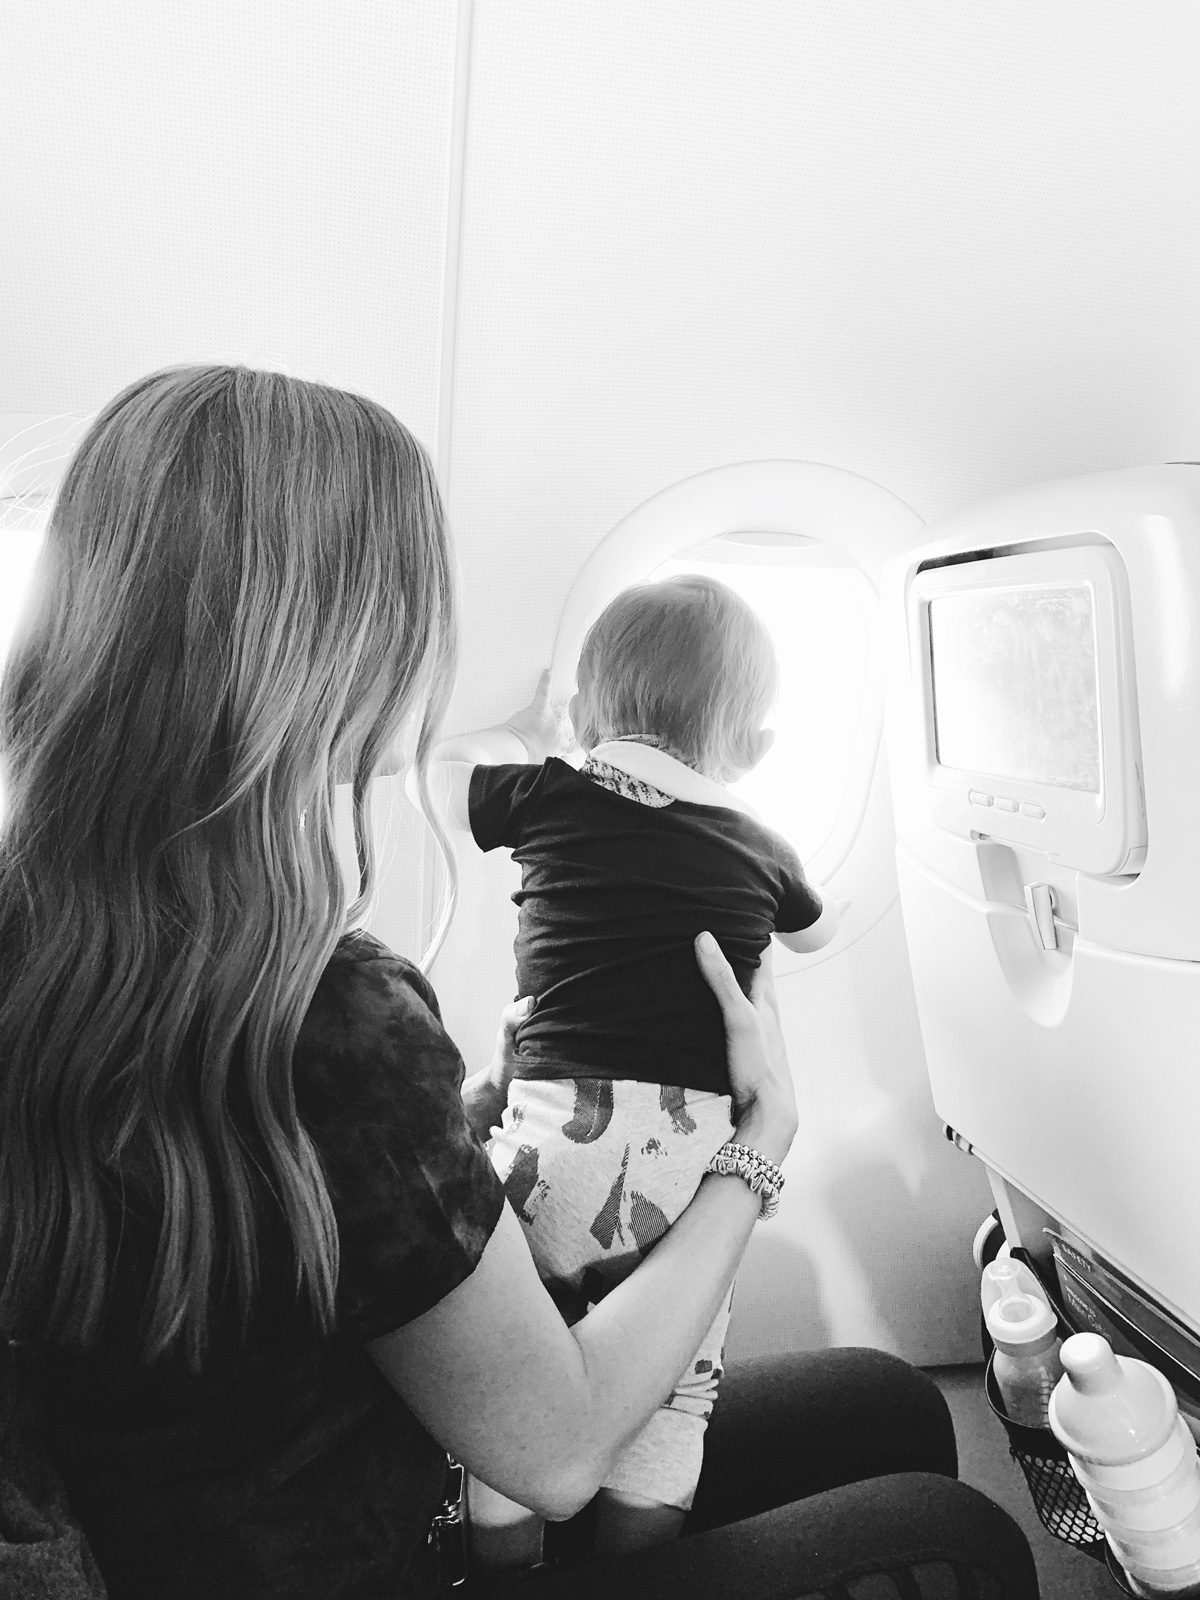 https://www.eatsleepwear.com/wp-content/uploads/2019/09/eatsleepwear-baby-travel-flight-flying-infant-traveltips-otis-kimberlylapides-6.jpg